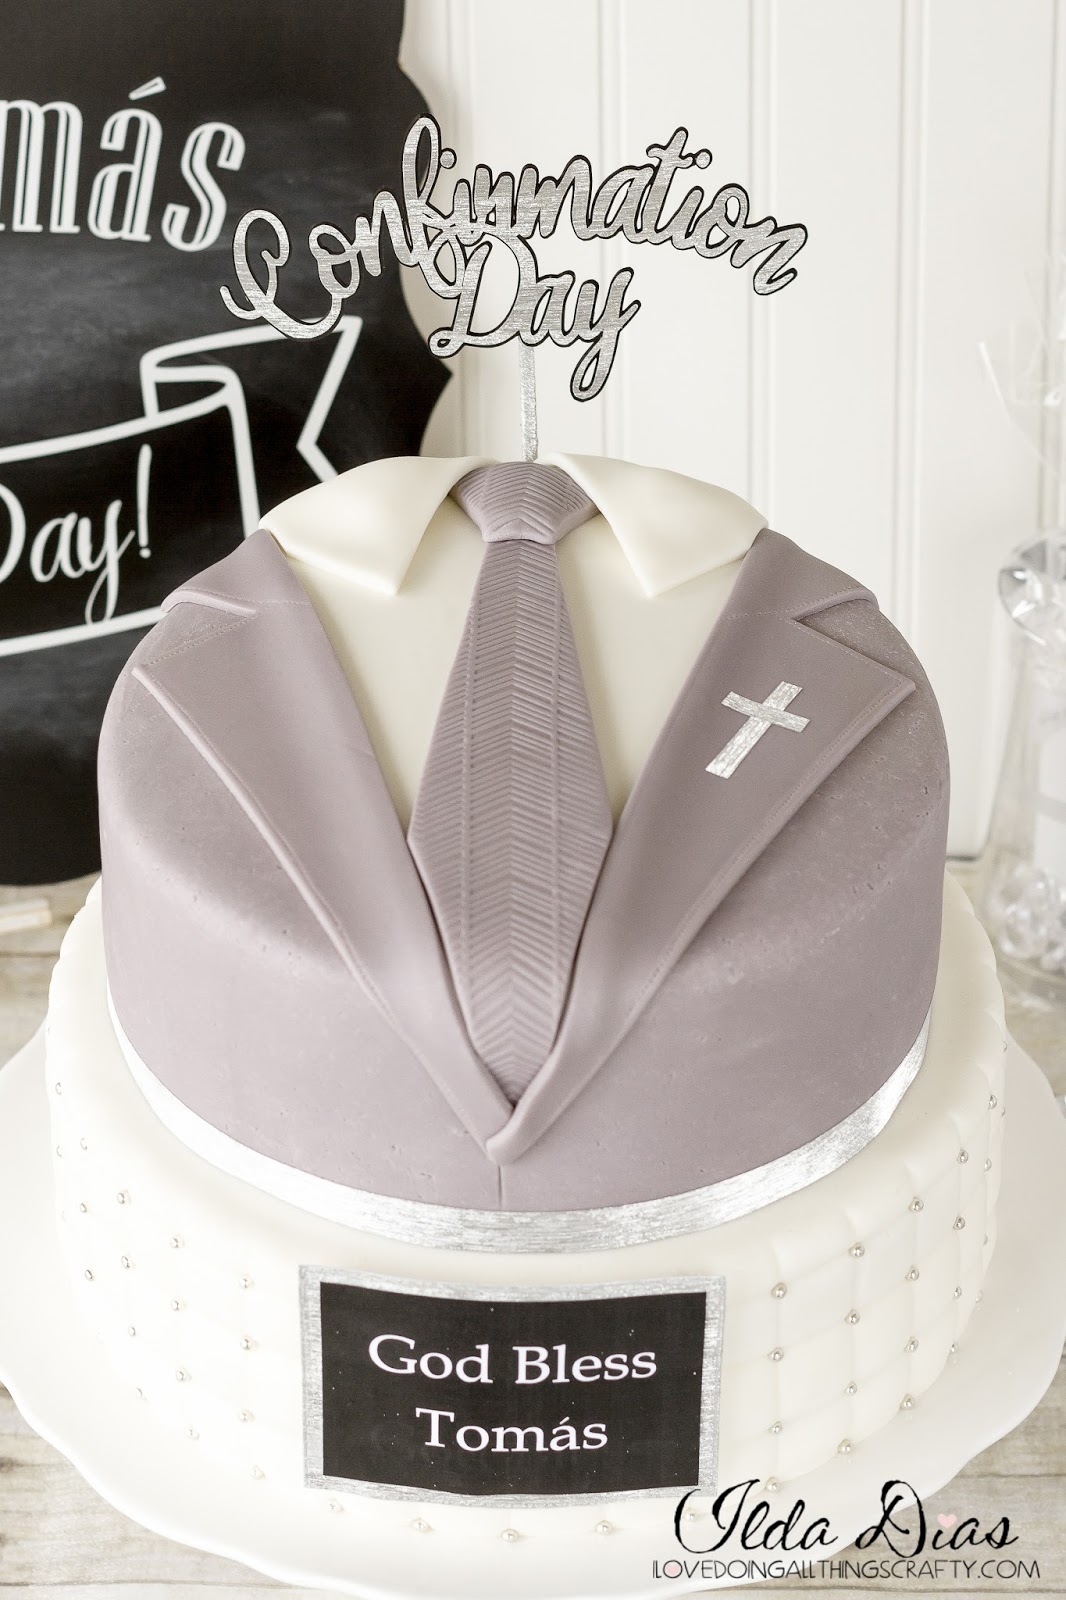 Sara Elizabeth - Custom Cakes & Gourmet Sweets: Suit and Tie Cake /  Missionary Cake Tutorial